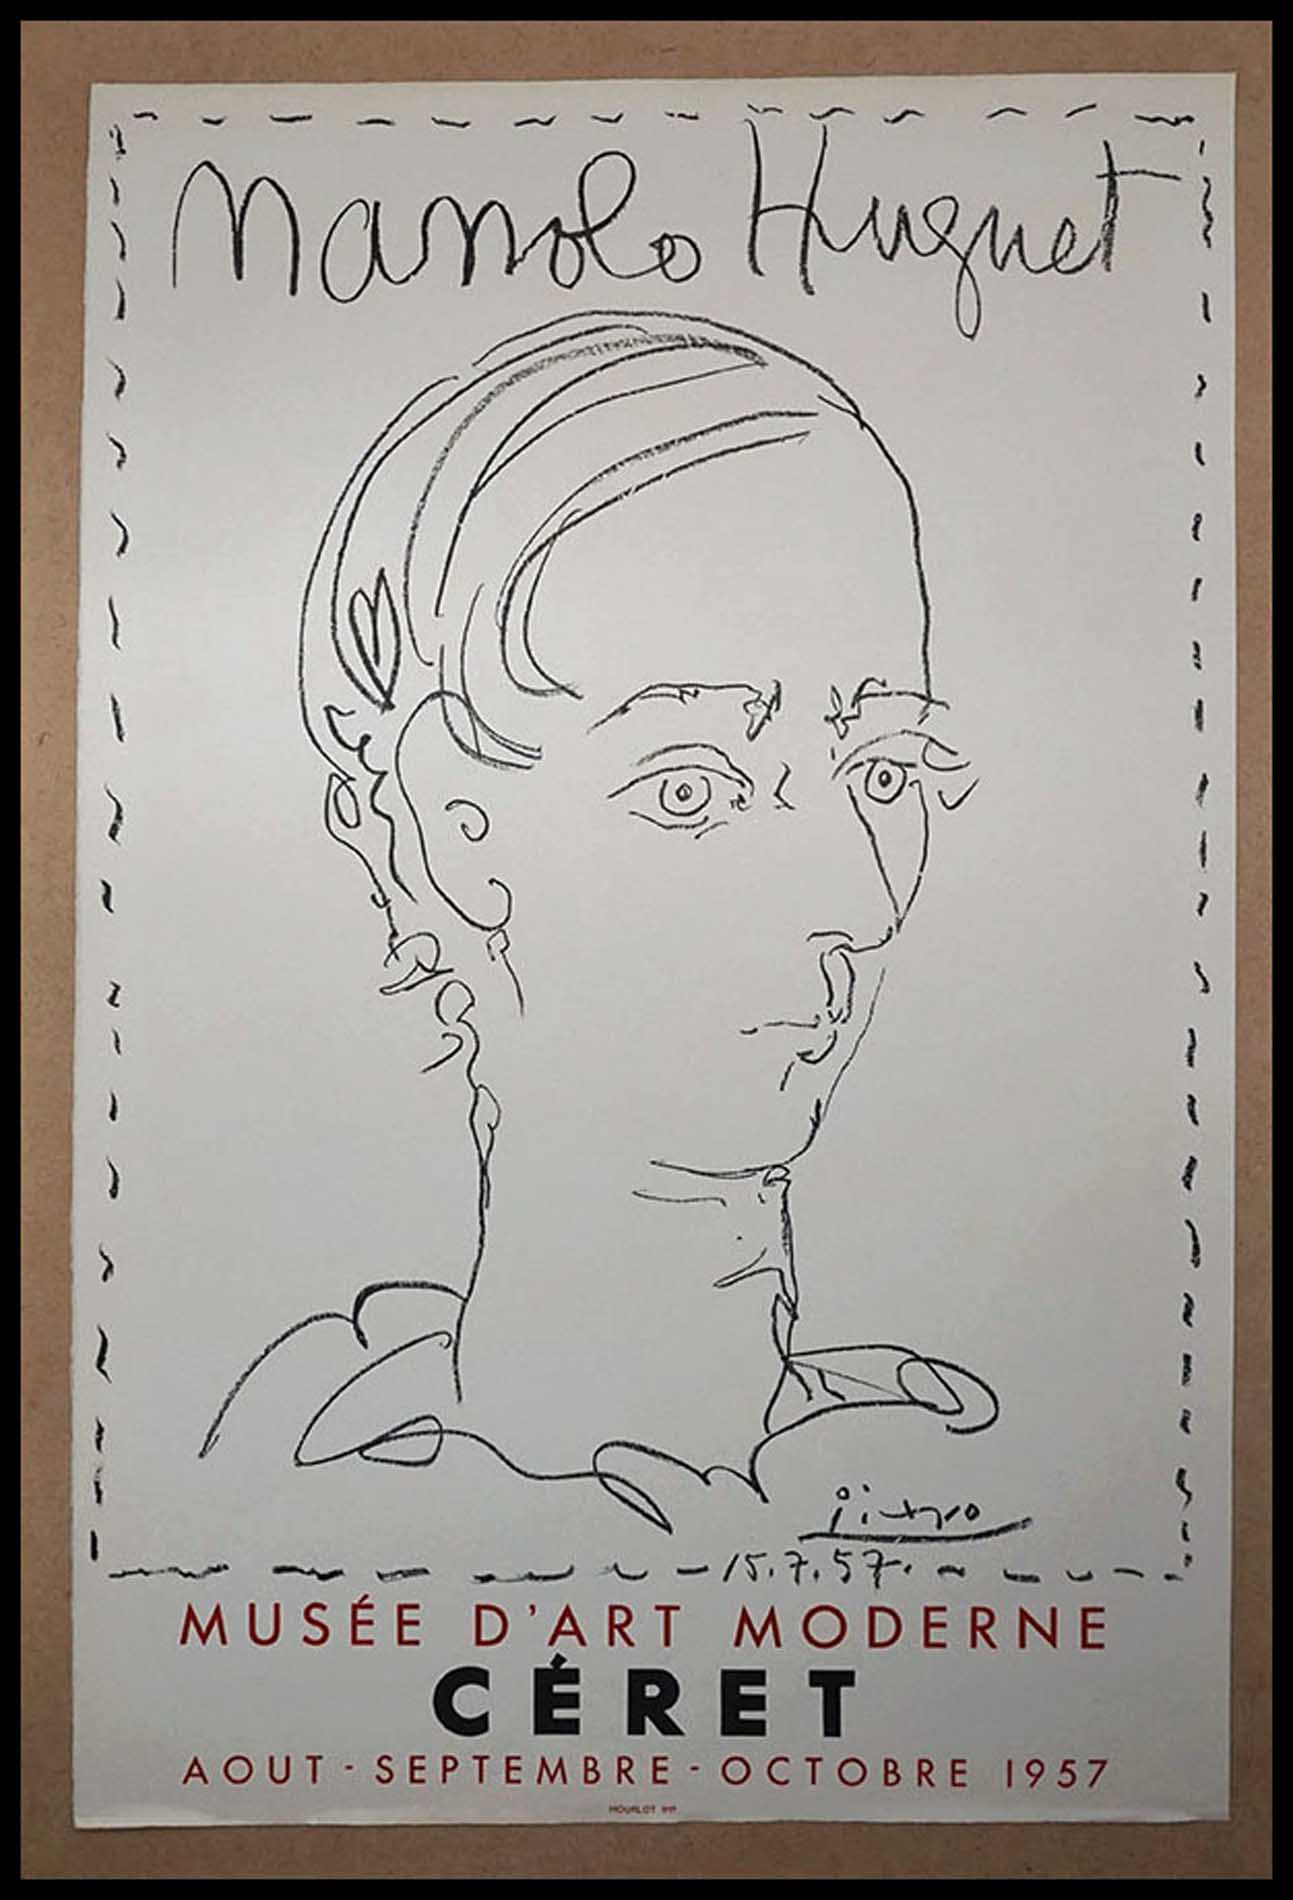 Pablo Picasso, Manolo Huguet, Musee d'Art moderne Ceret